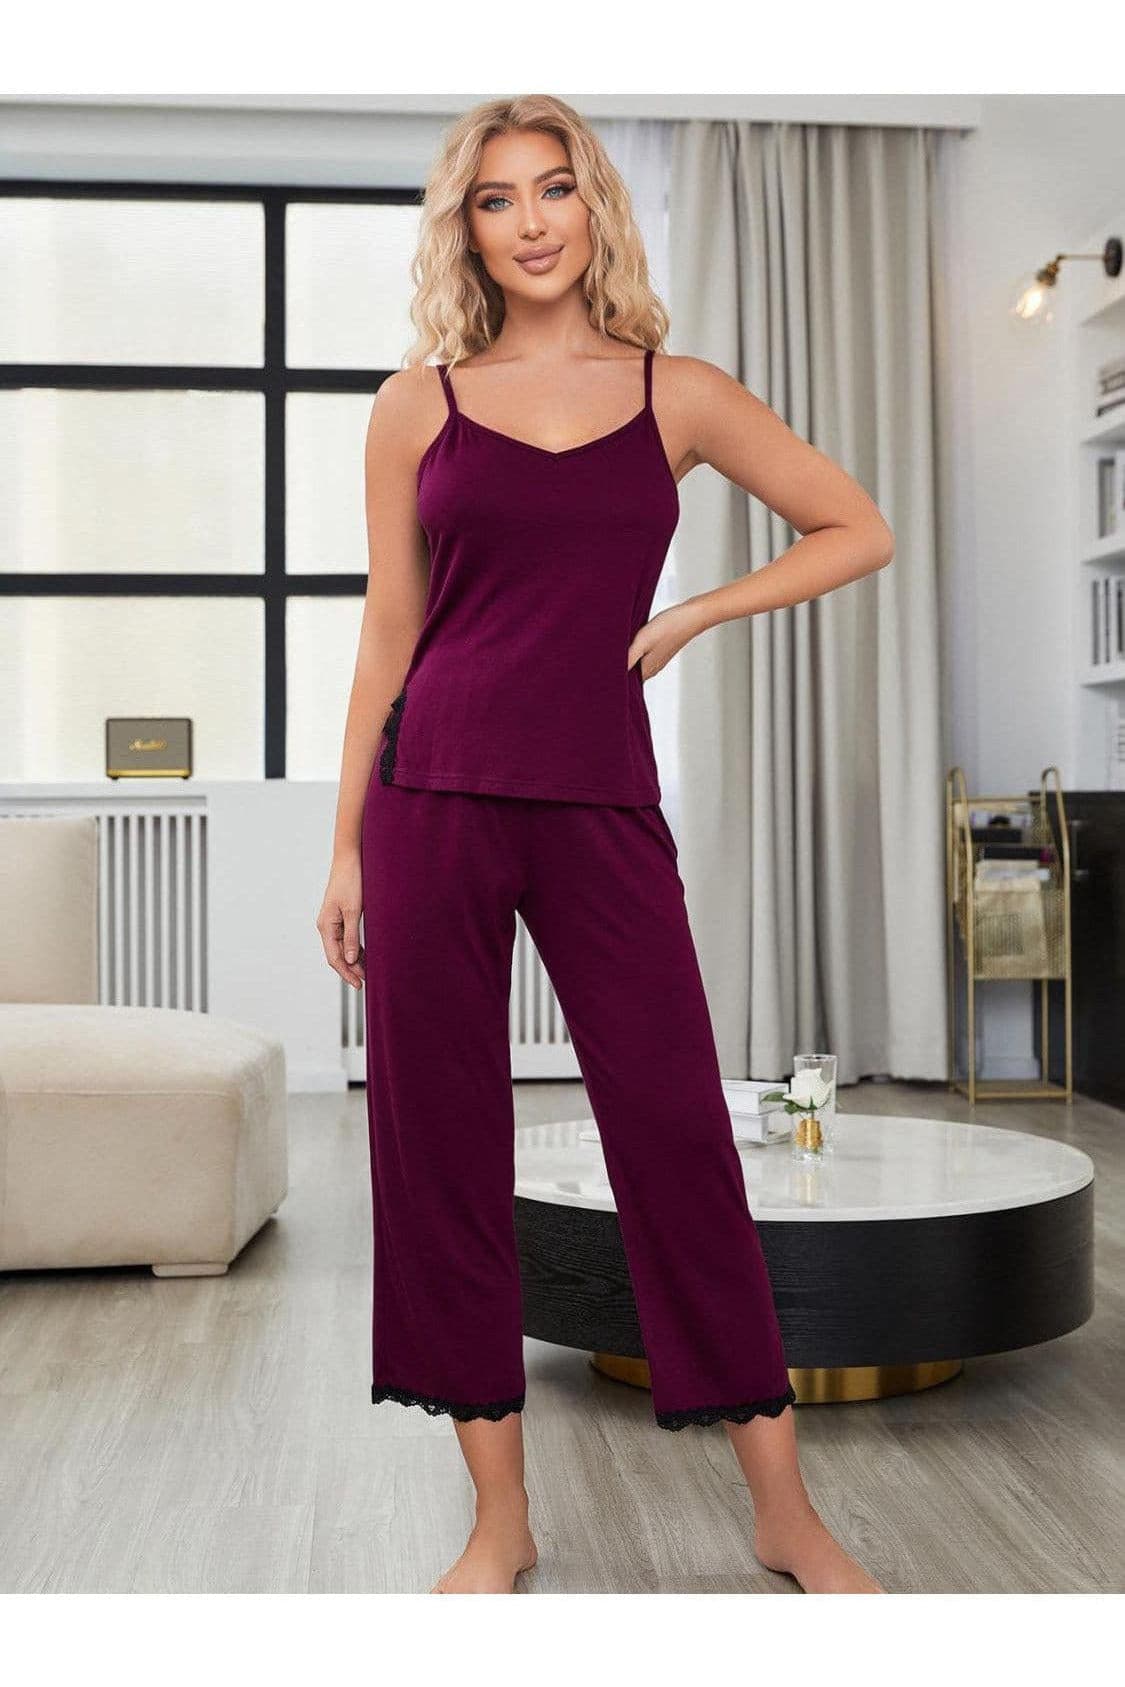 Alex V-Neck Lace Trim Slit Cami and Pants Pajama Set - SwagglyLife Home & Fashion